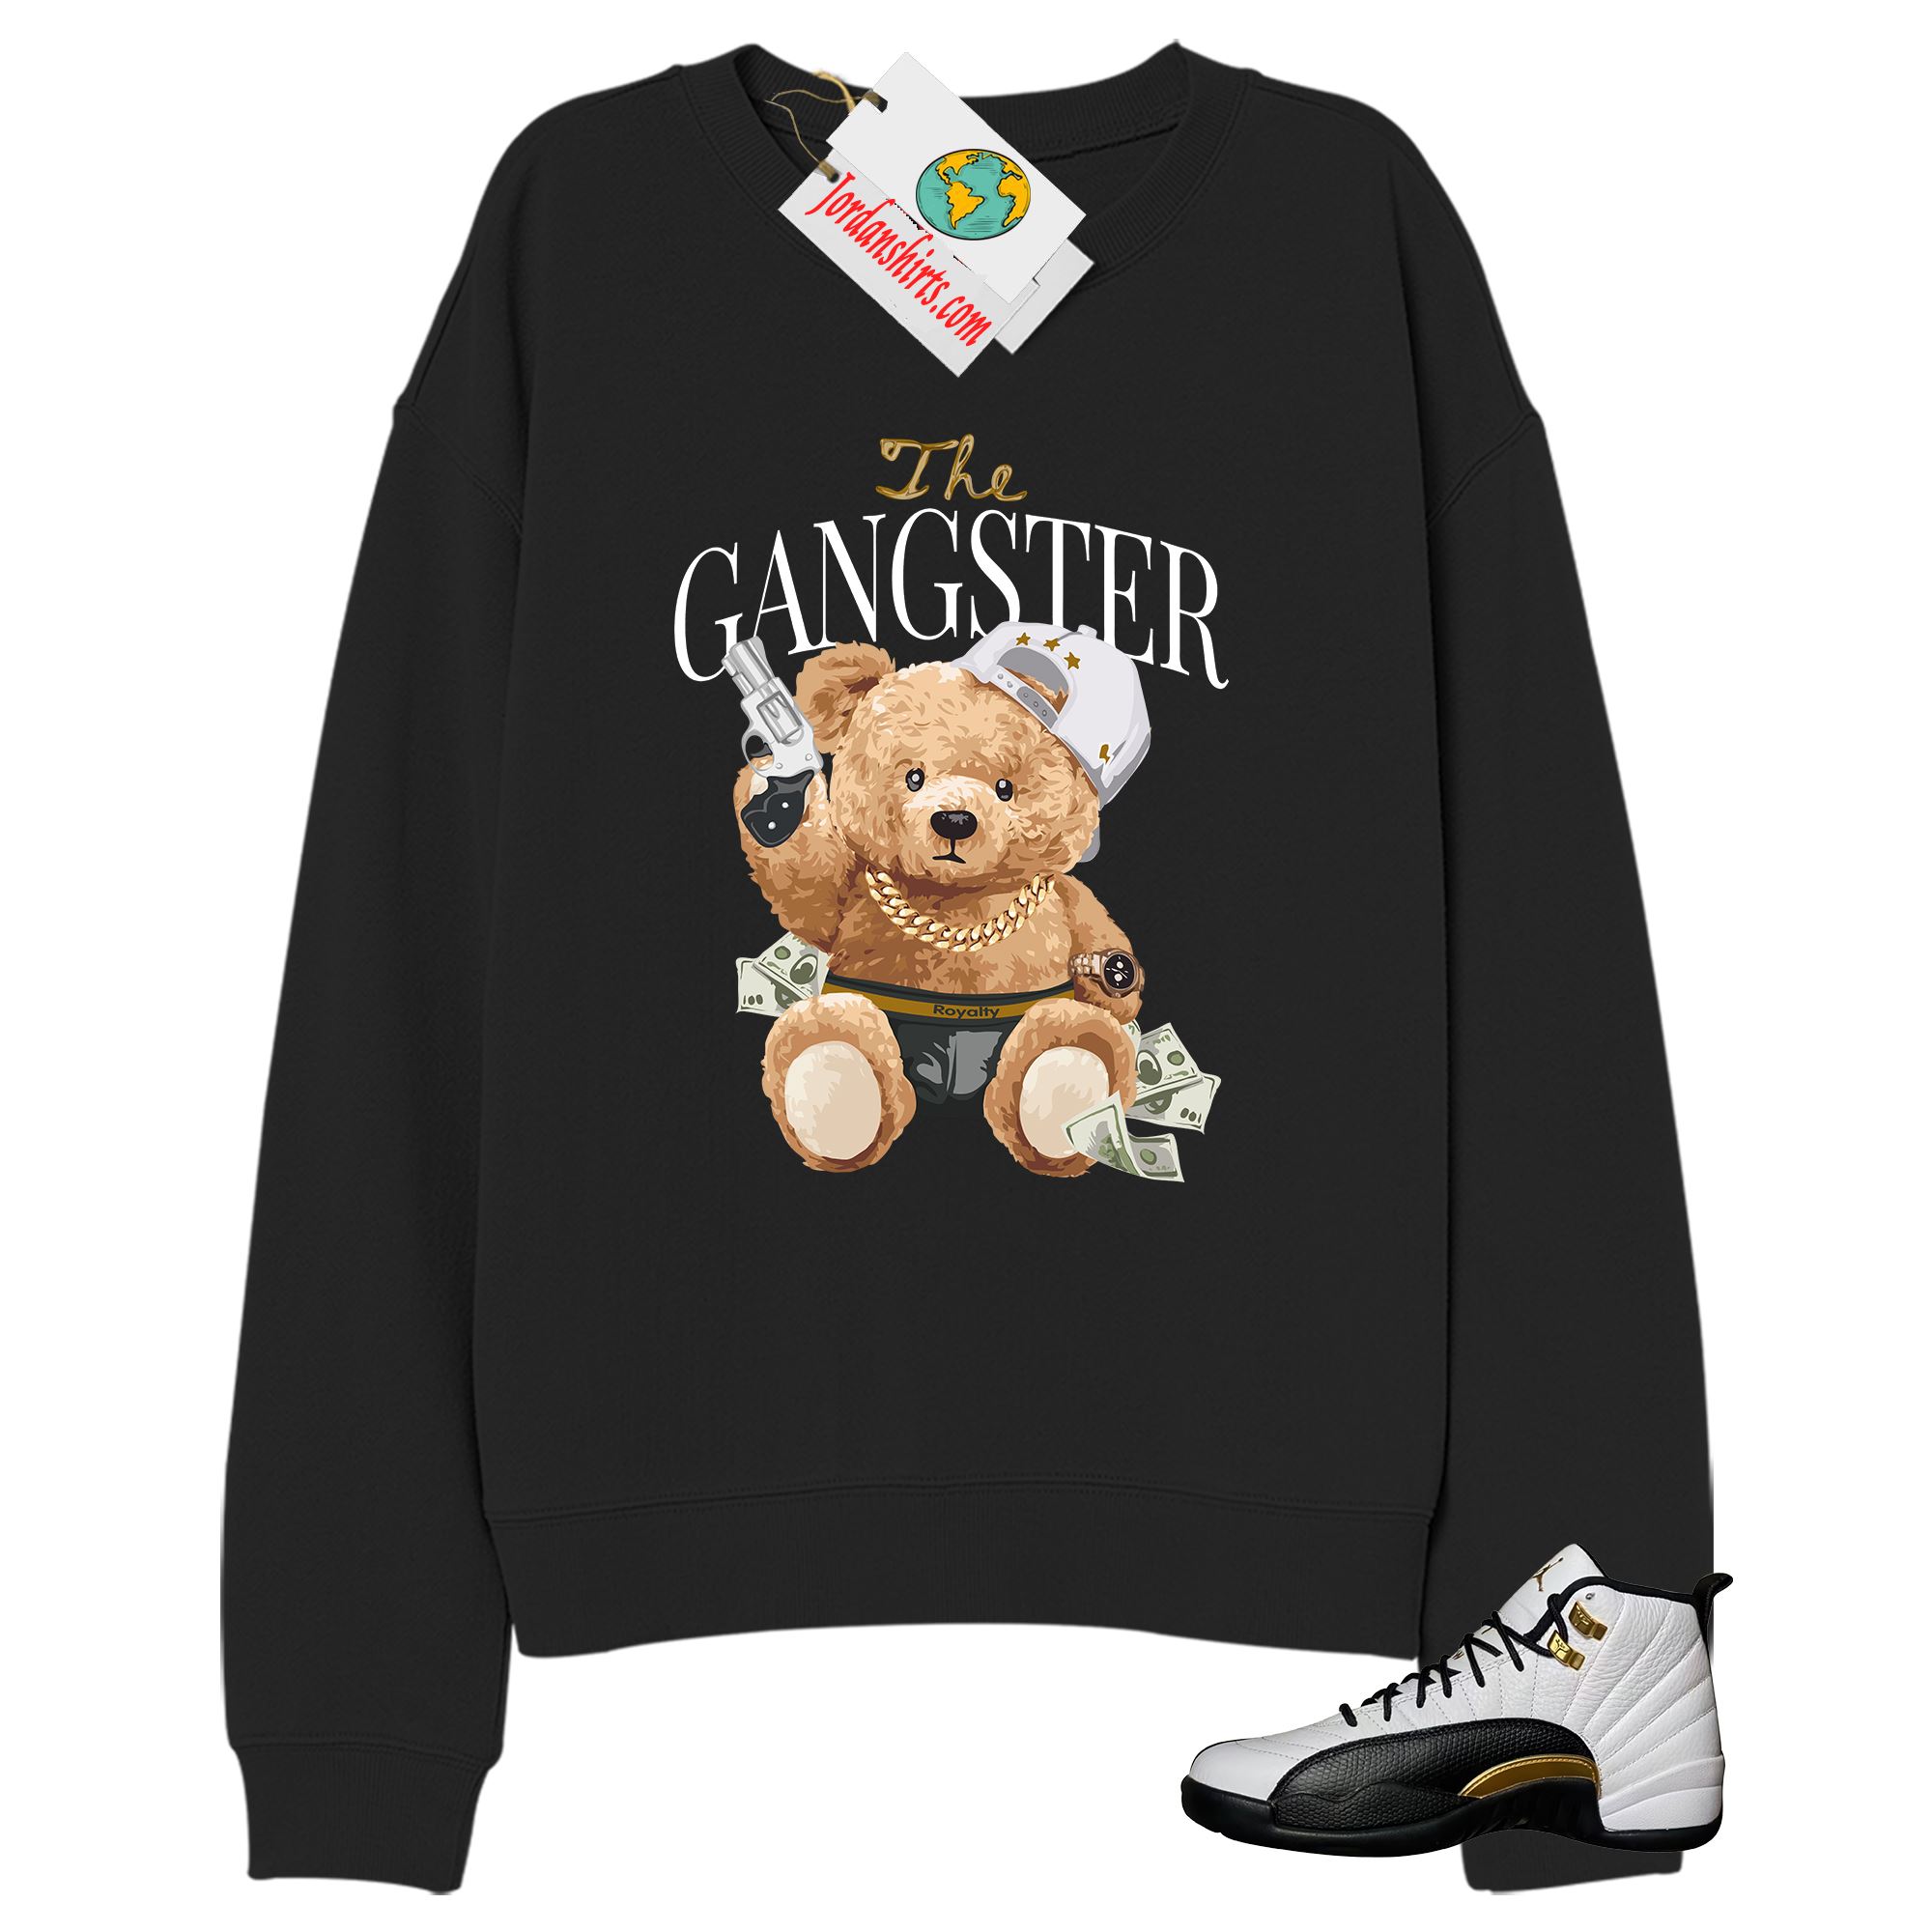 Jordan 12 Sweatshirt, Teddy Bear The Gangster Black Sweatshirt Air Jordan 12 Royalty 12s Plus Size Up To 5xl